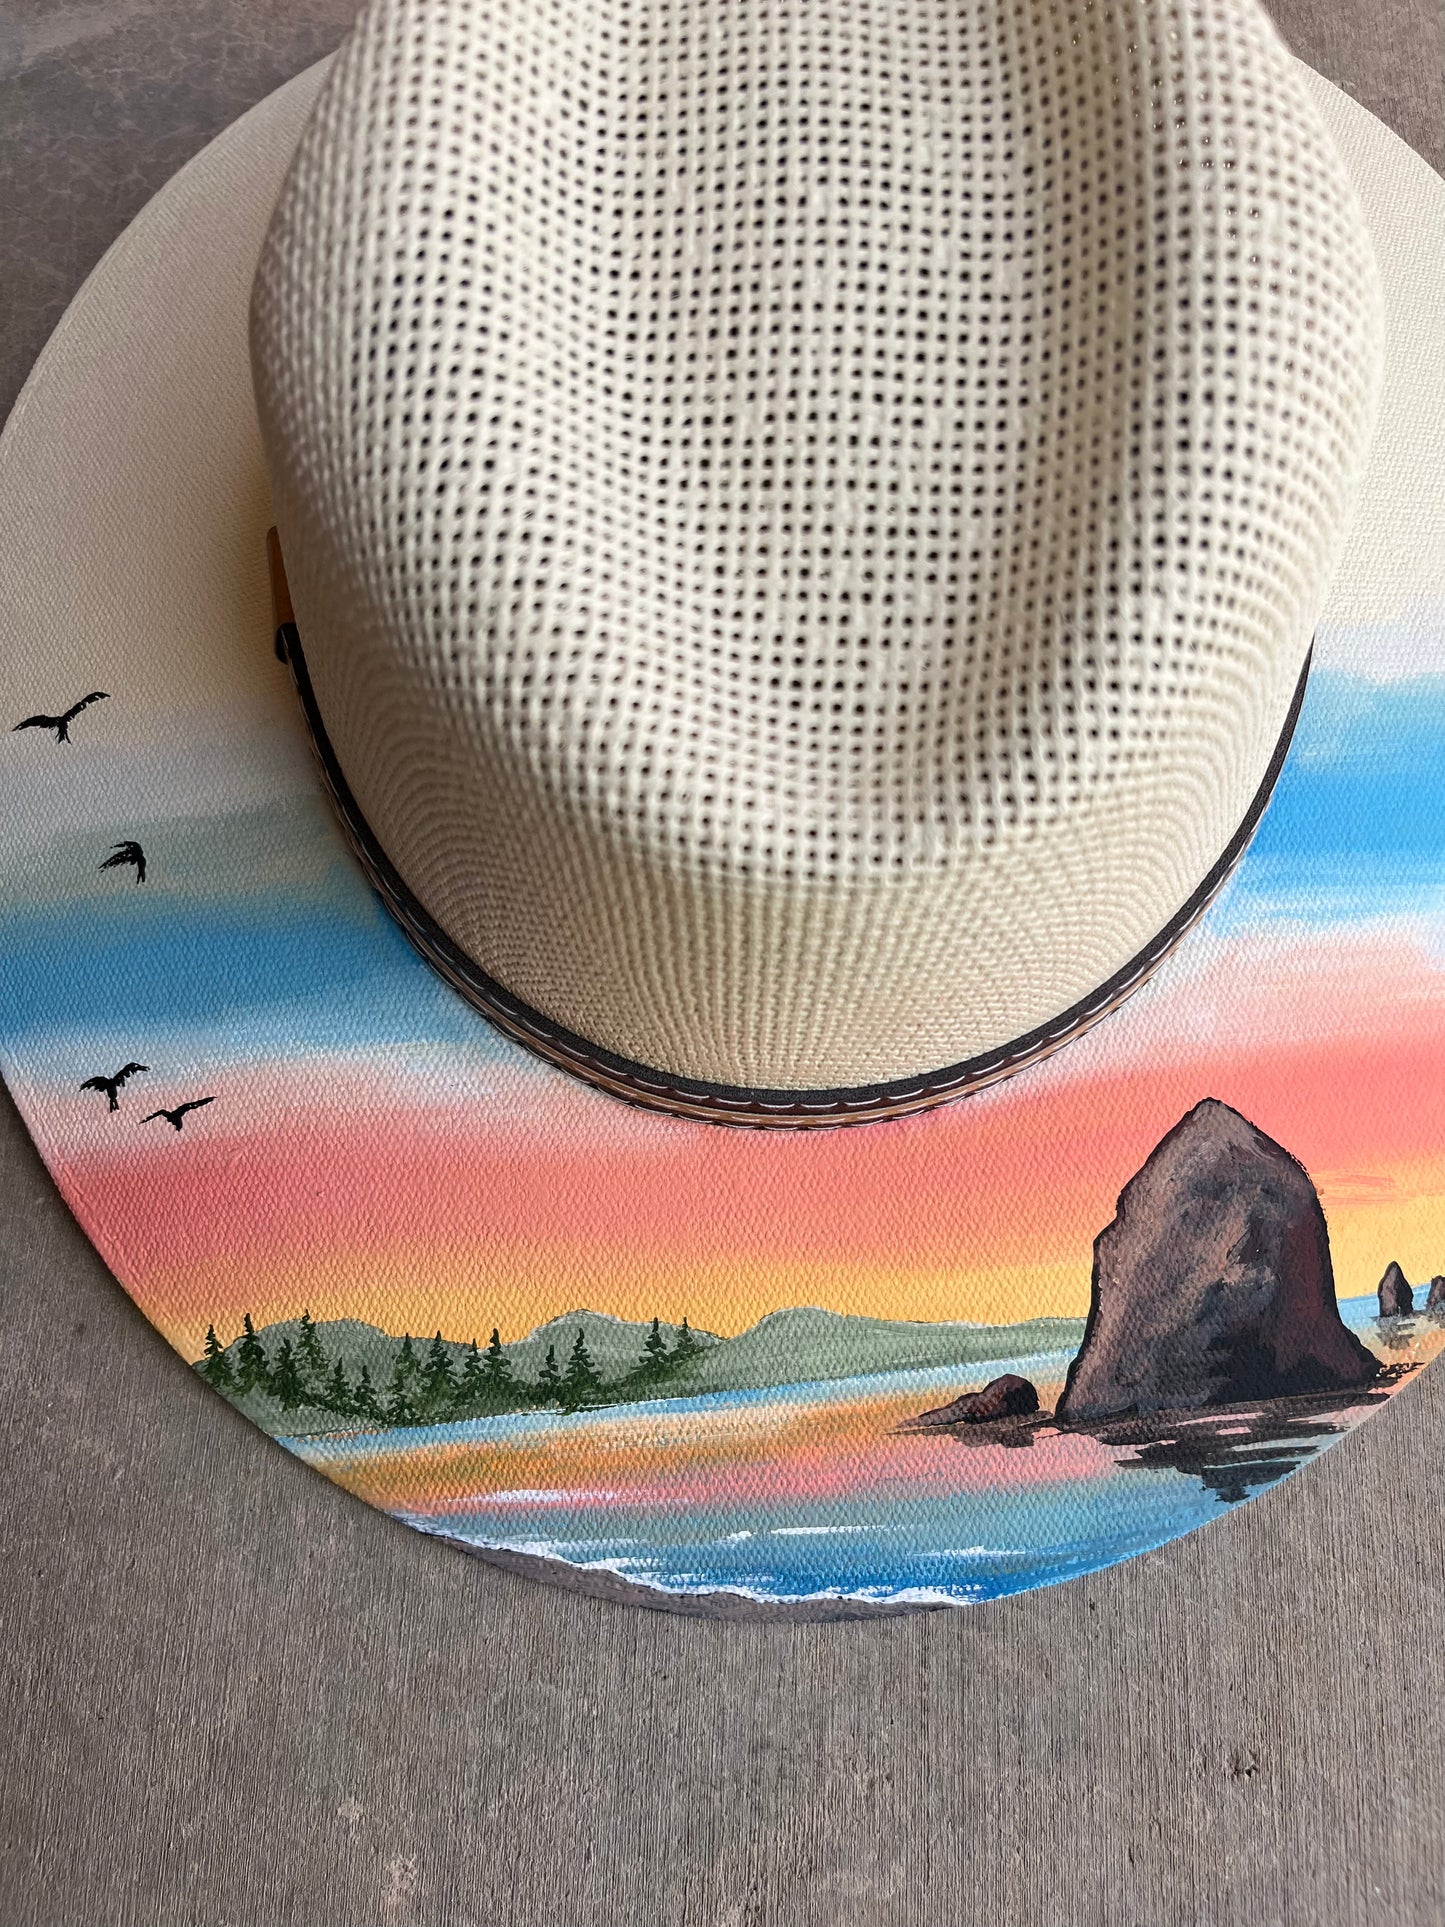 Oregon coast haystack rock cannon beach summer straw jute rancher Panama hat